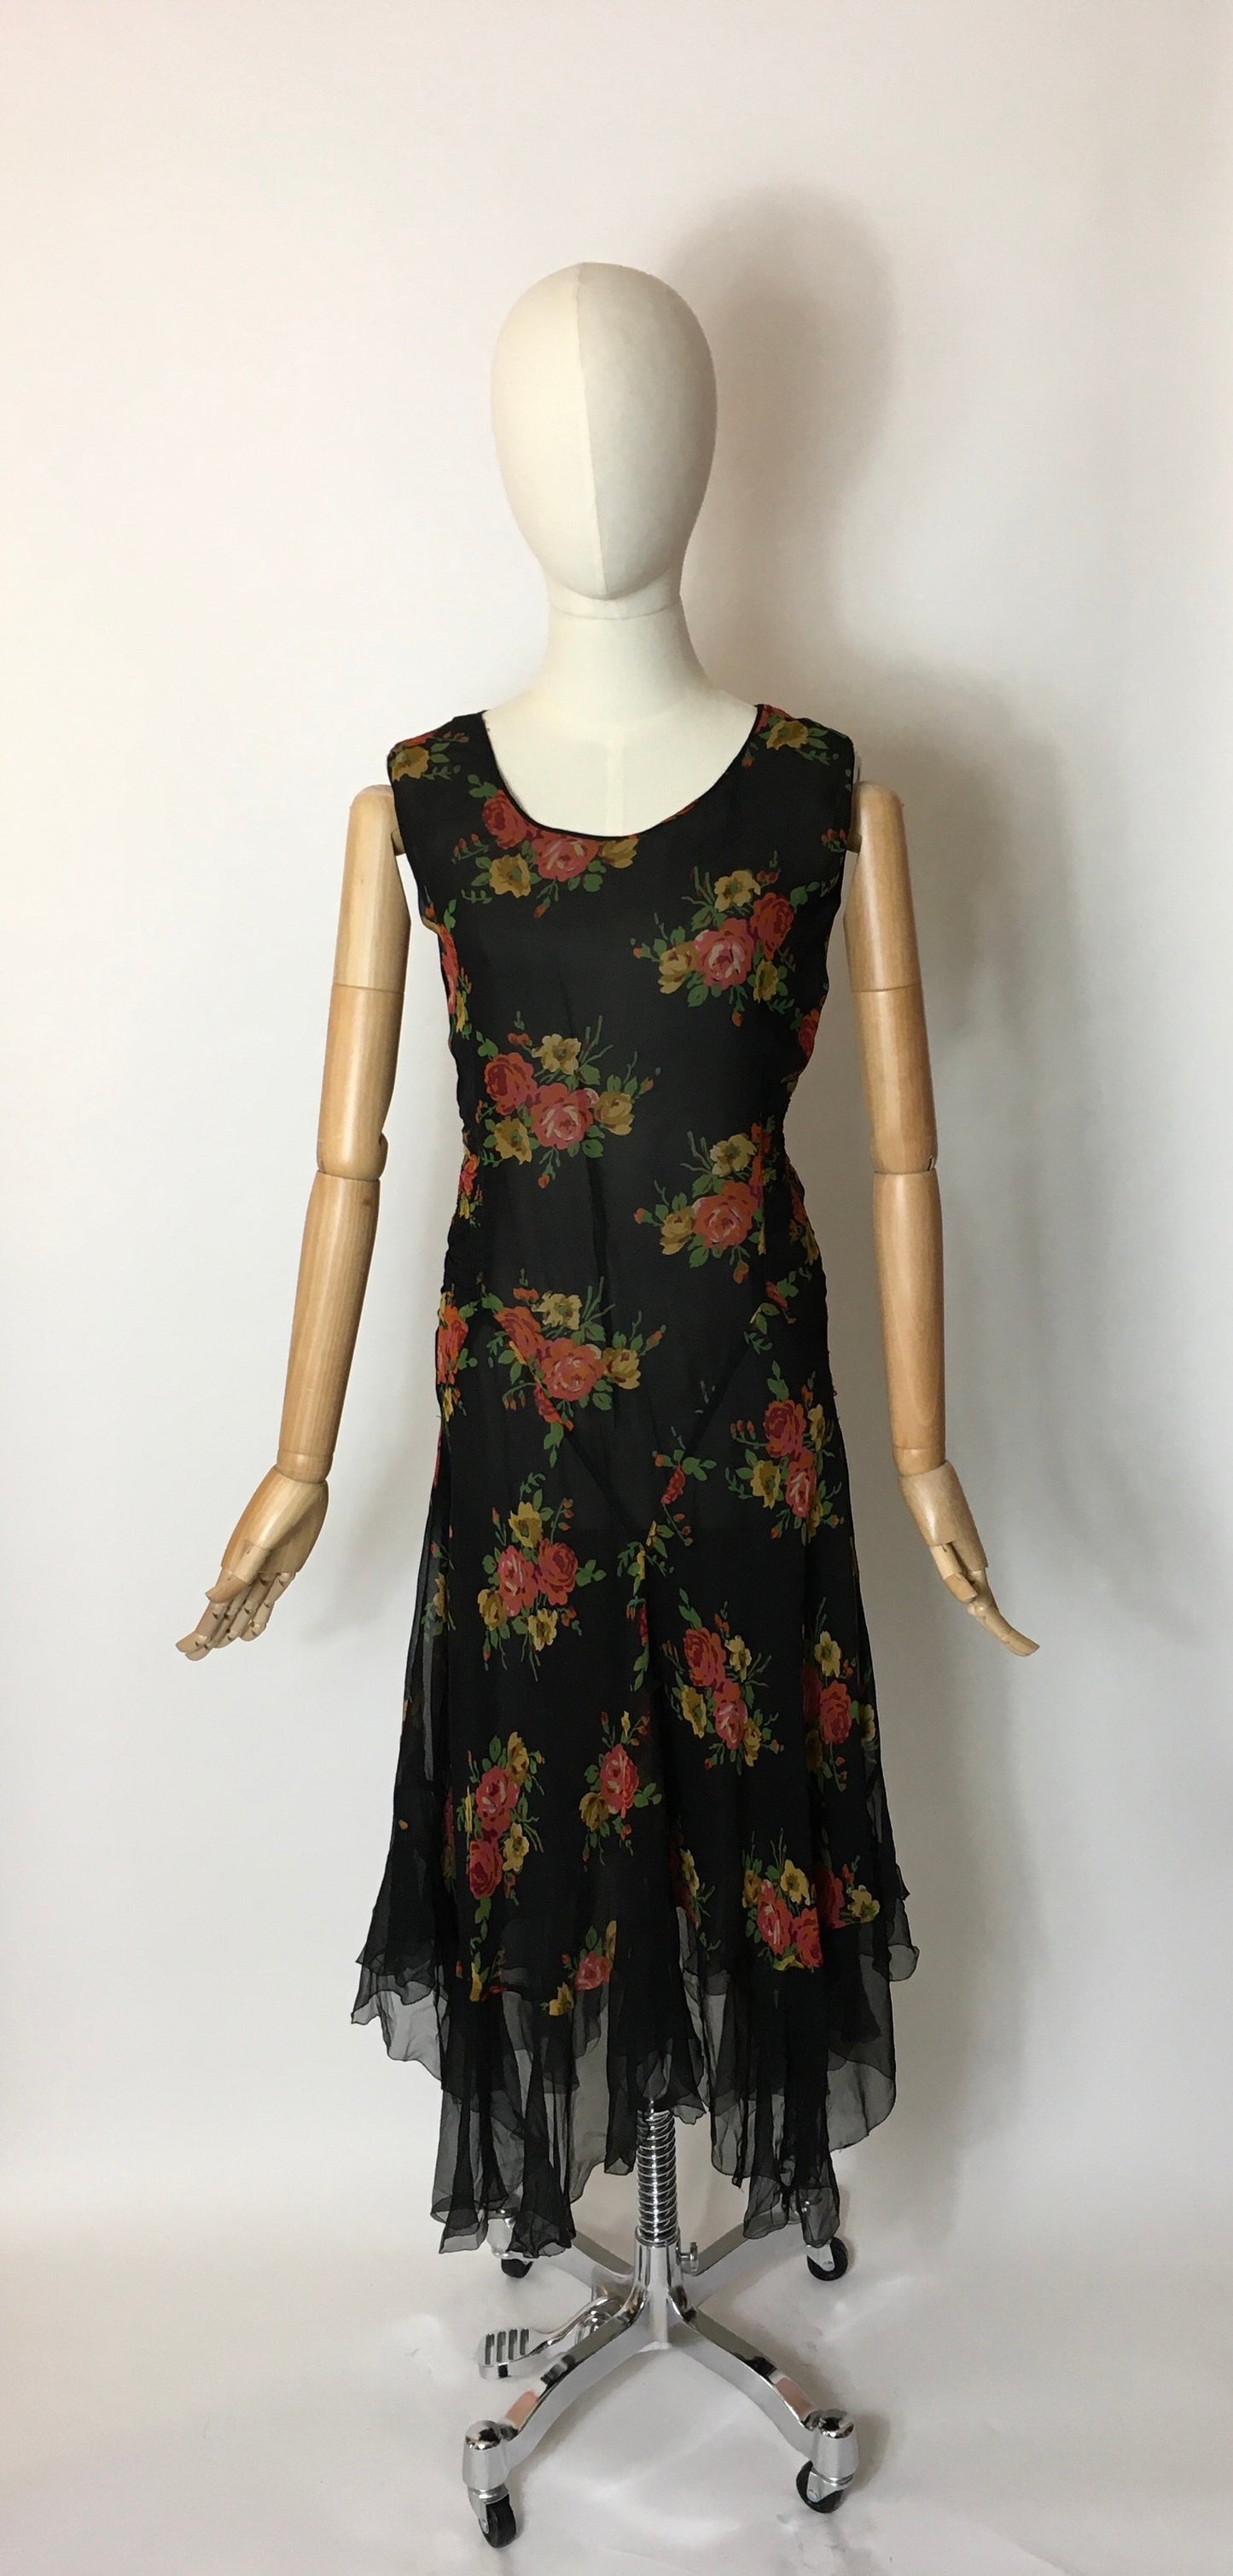 Original 1930’s SENSATIONAL 3pc Set in A Floral Chiffon - Dress, Jacket & Caplet Set